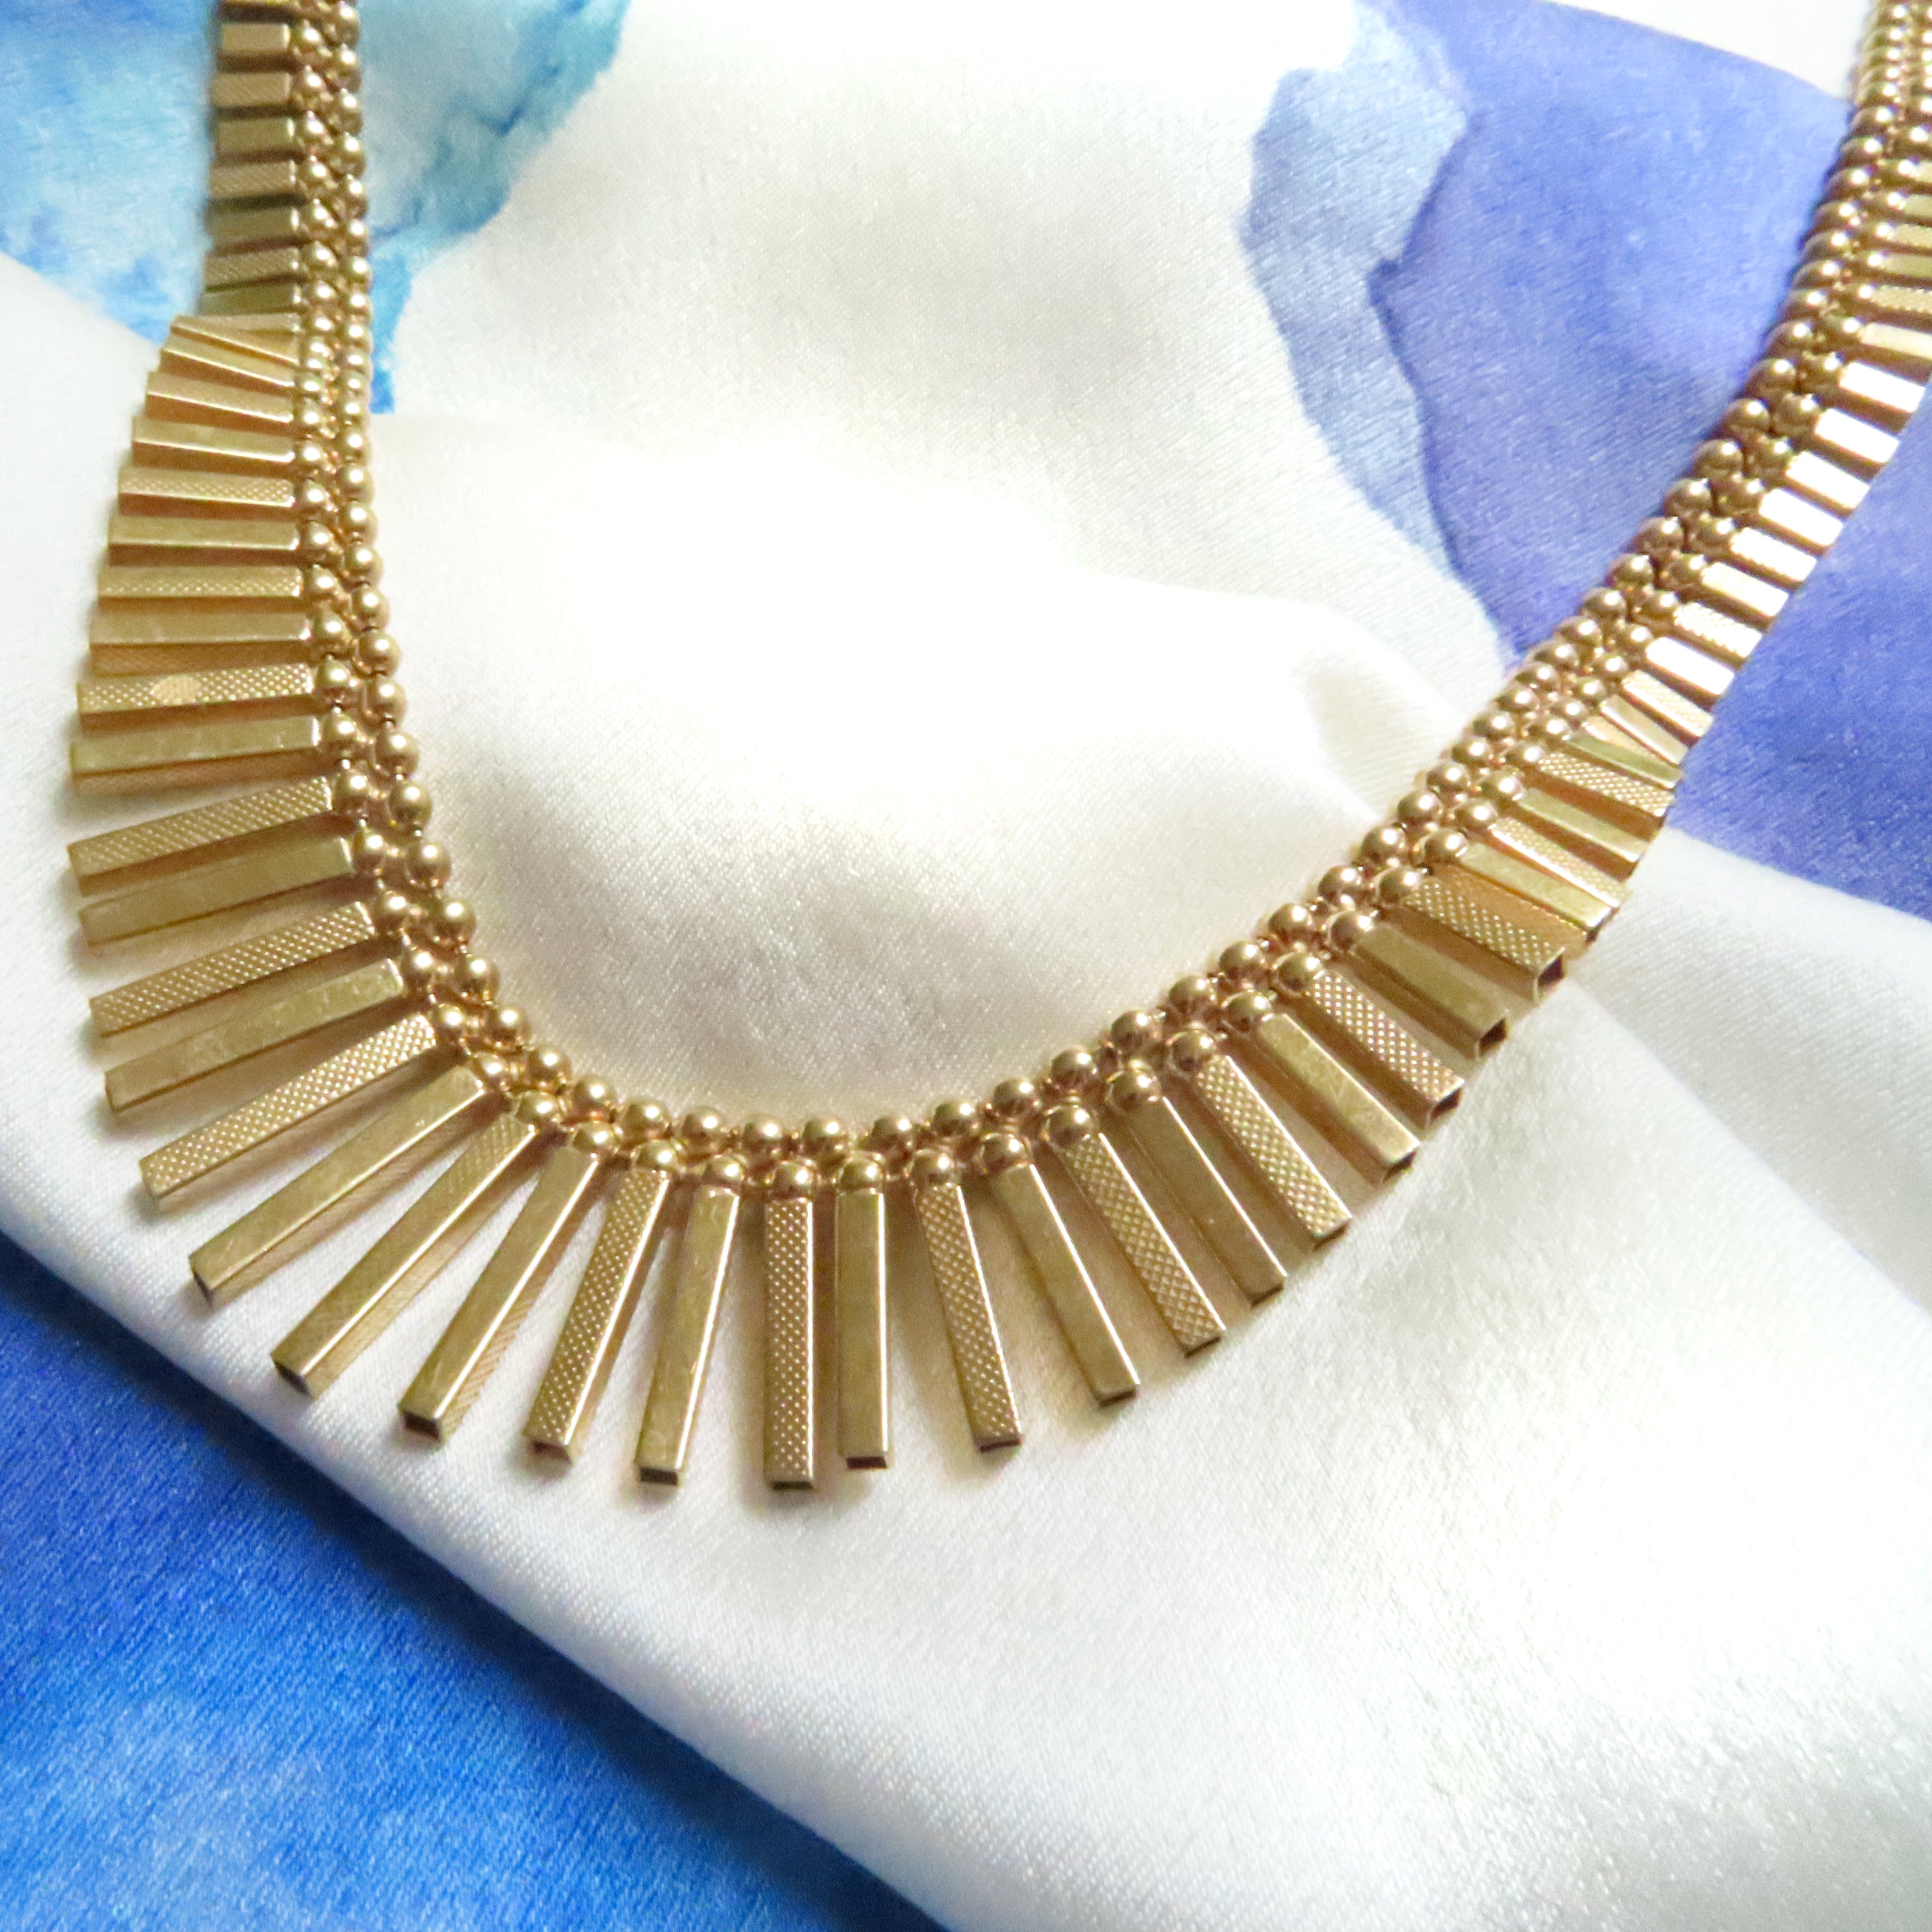 1980s unoaeere cleopatra fringe necklace 9ct gold 27g